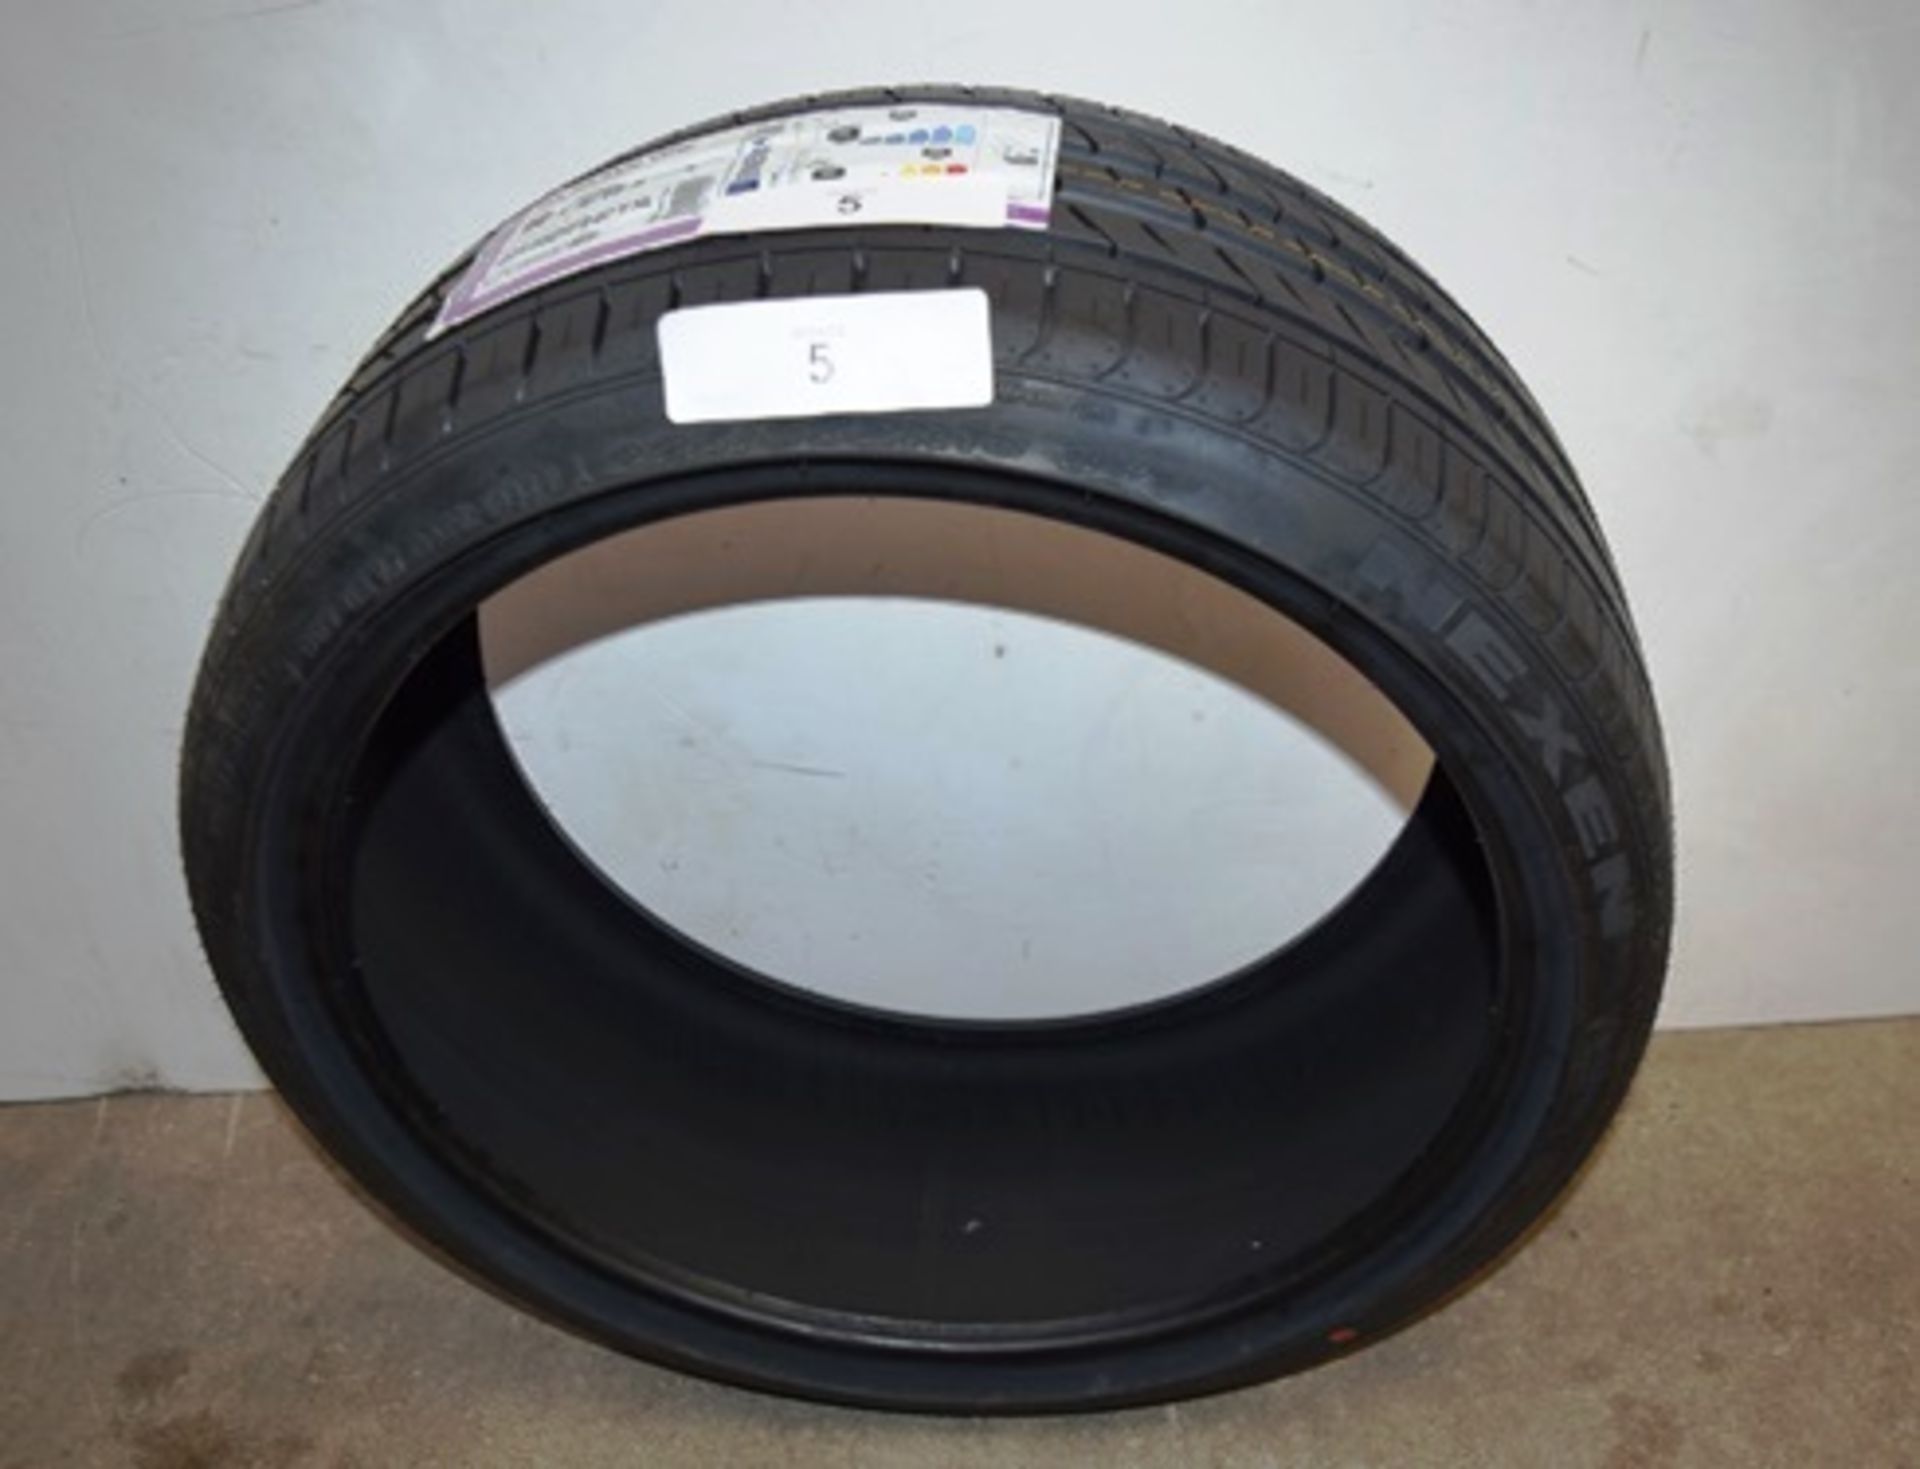 1 x Nexen N Fera SU1 tyre, size 225/35ZR18 87Y XL - New with label (GS1) - Image 2 of 2